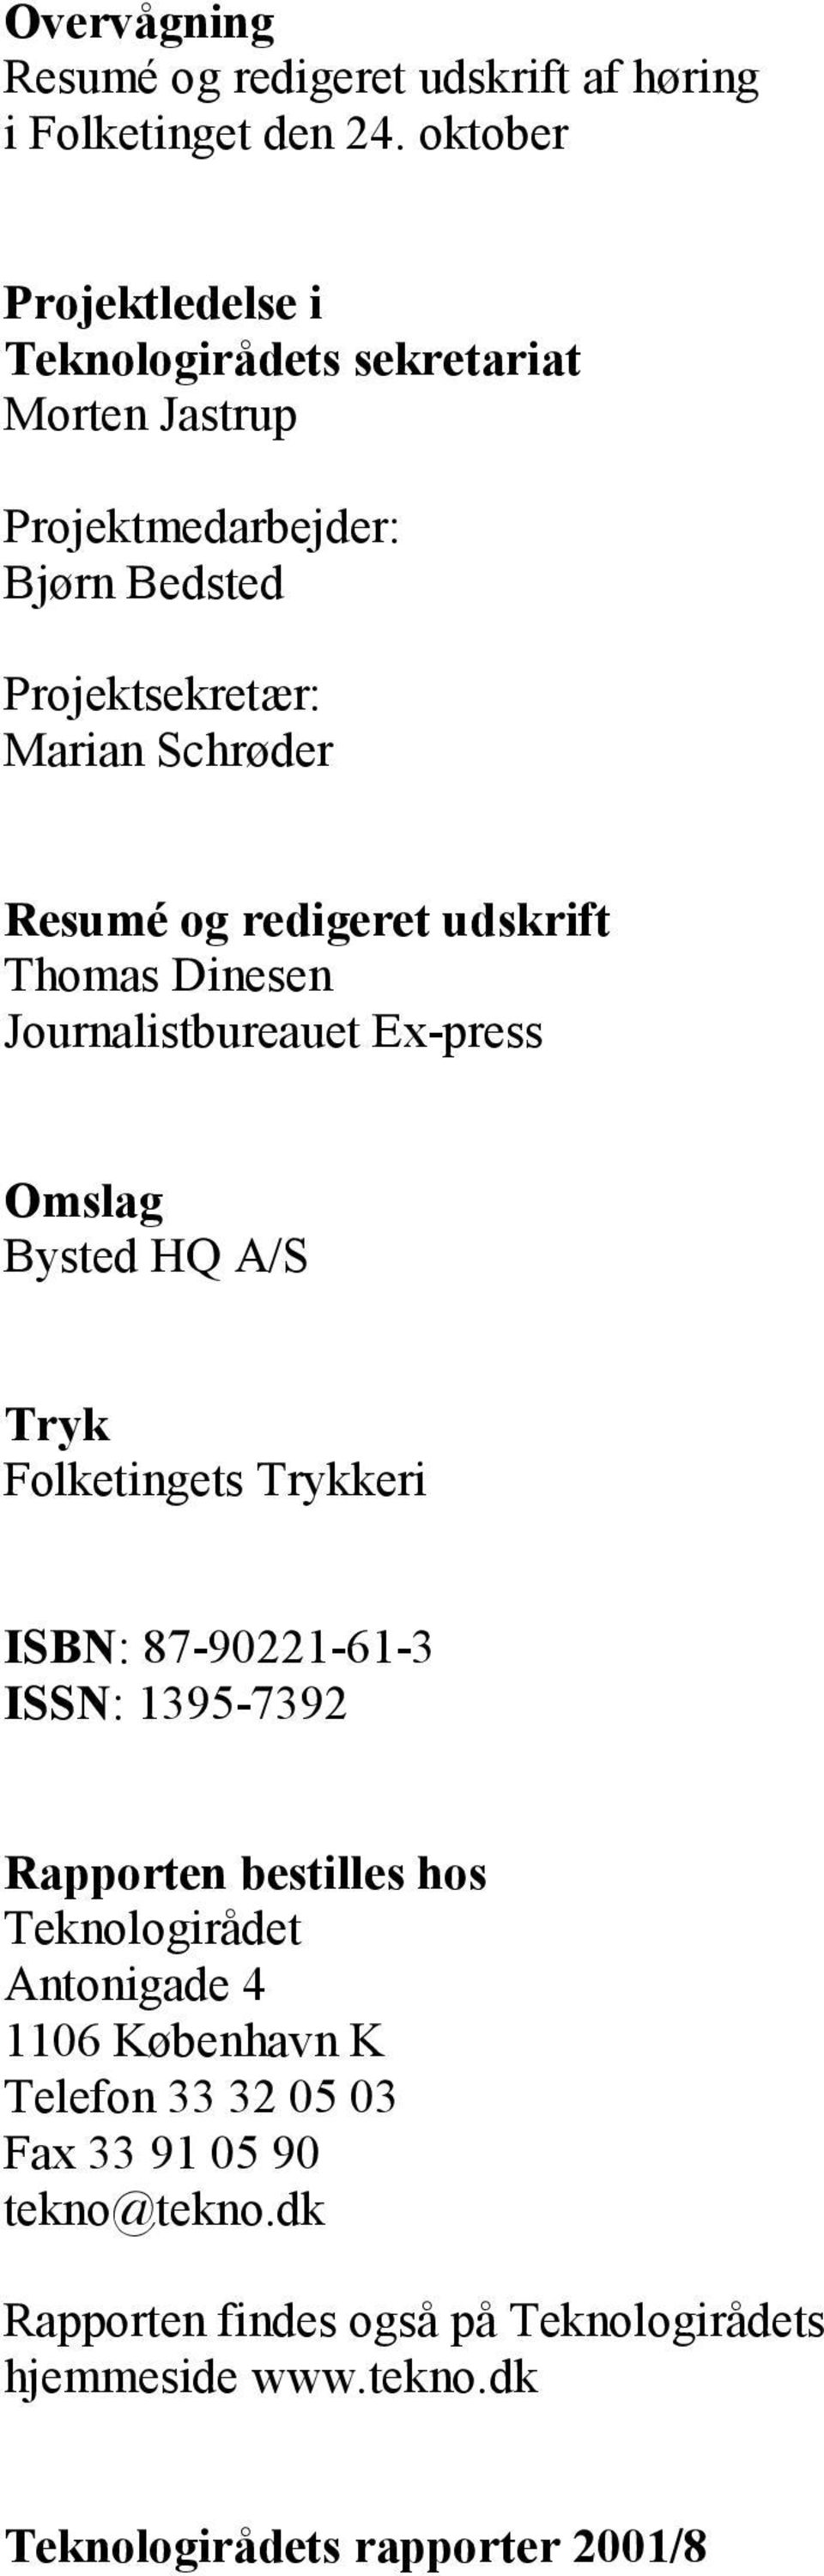 redigeret udskrift Thomas Dinesen Journalistbureauet Ex-press Omslag Bysted HQ A/S Tryk Folketingets Trykkeri ISBN: 87-90221-61-3 ISSN: 1395-7392